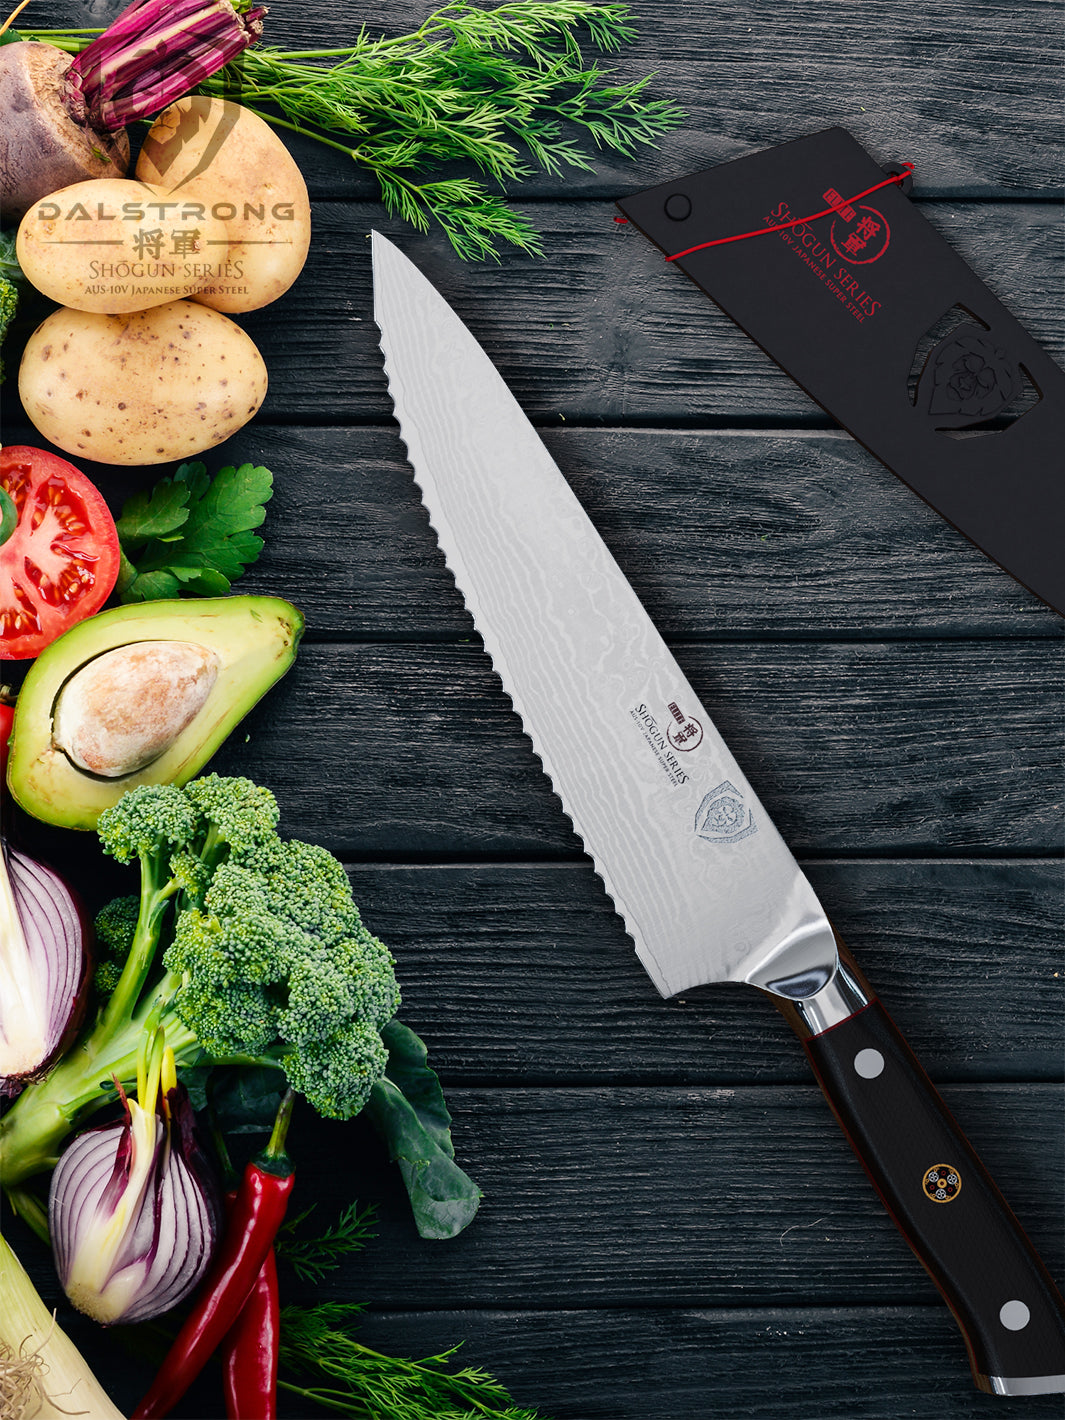 Dalstrong Chef Knife - 8 inch Blade - Shogun Series ELITE - Damascus -  Japanese AUS-10V Super Steel - G10 Black Handle - Razor Sharp -  Professional